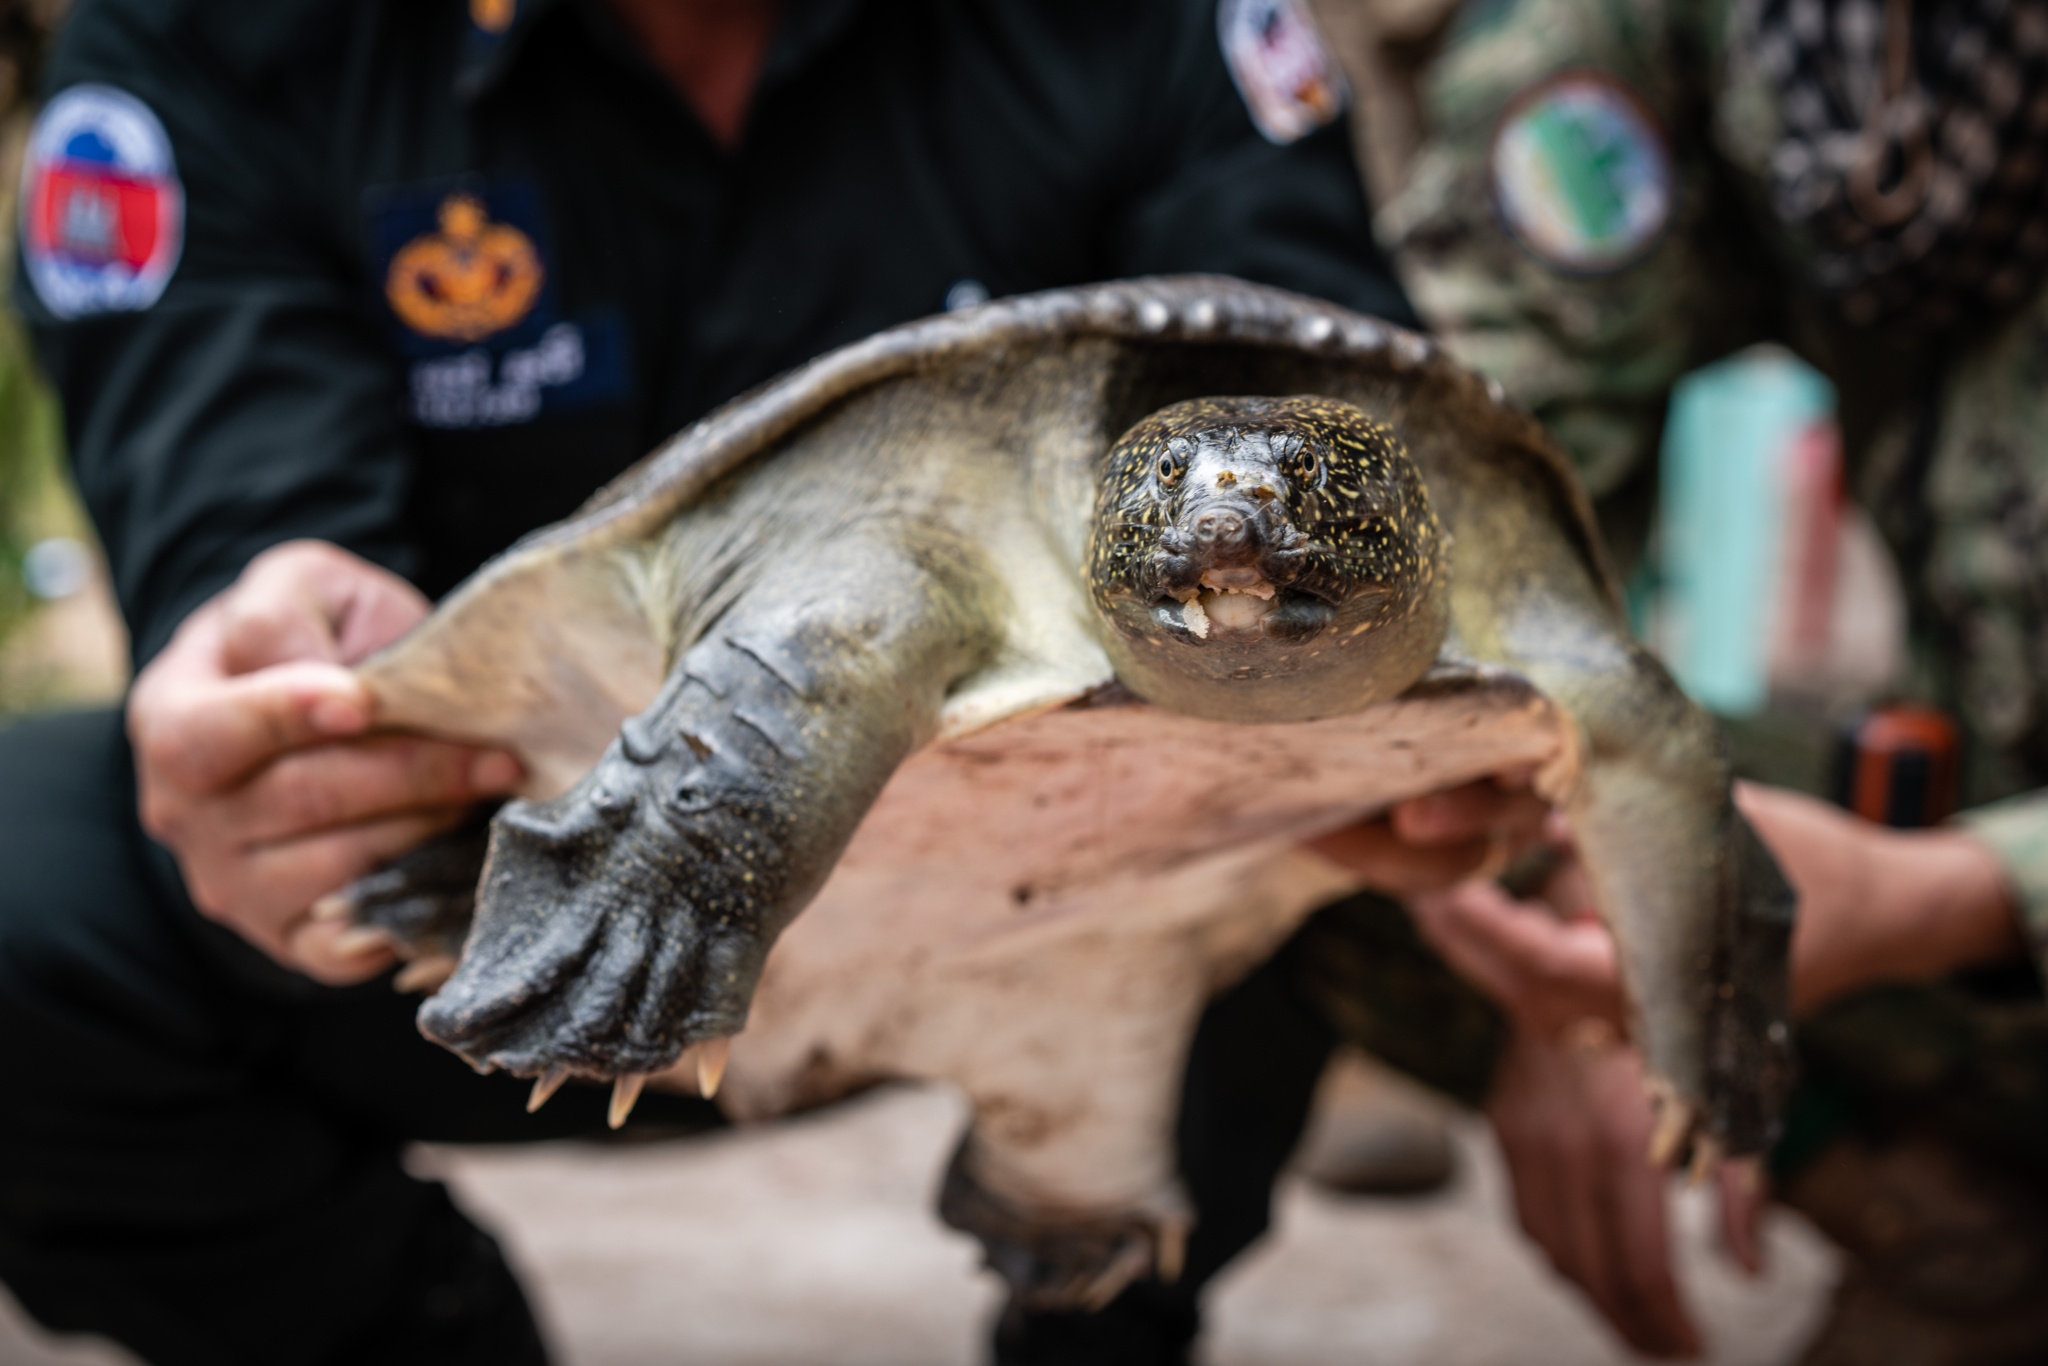 An Asian softshell turtle seized in an illegal wildlife trade raid